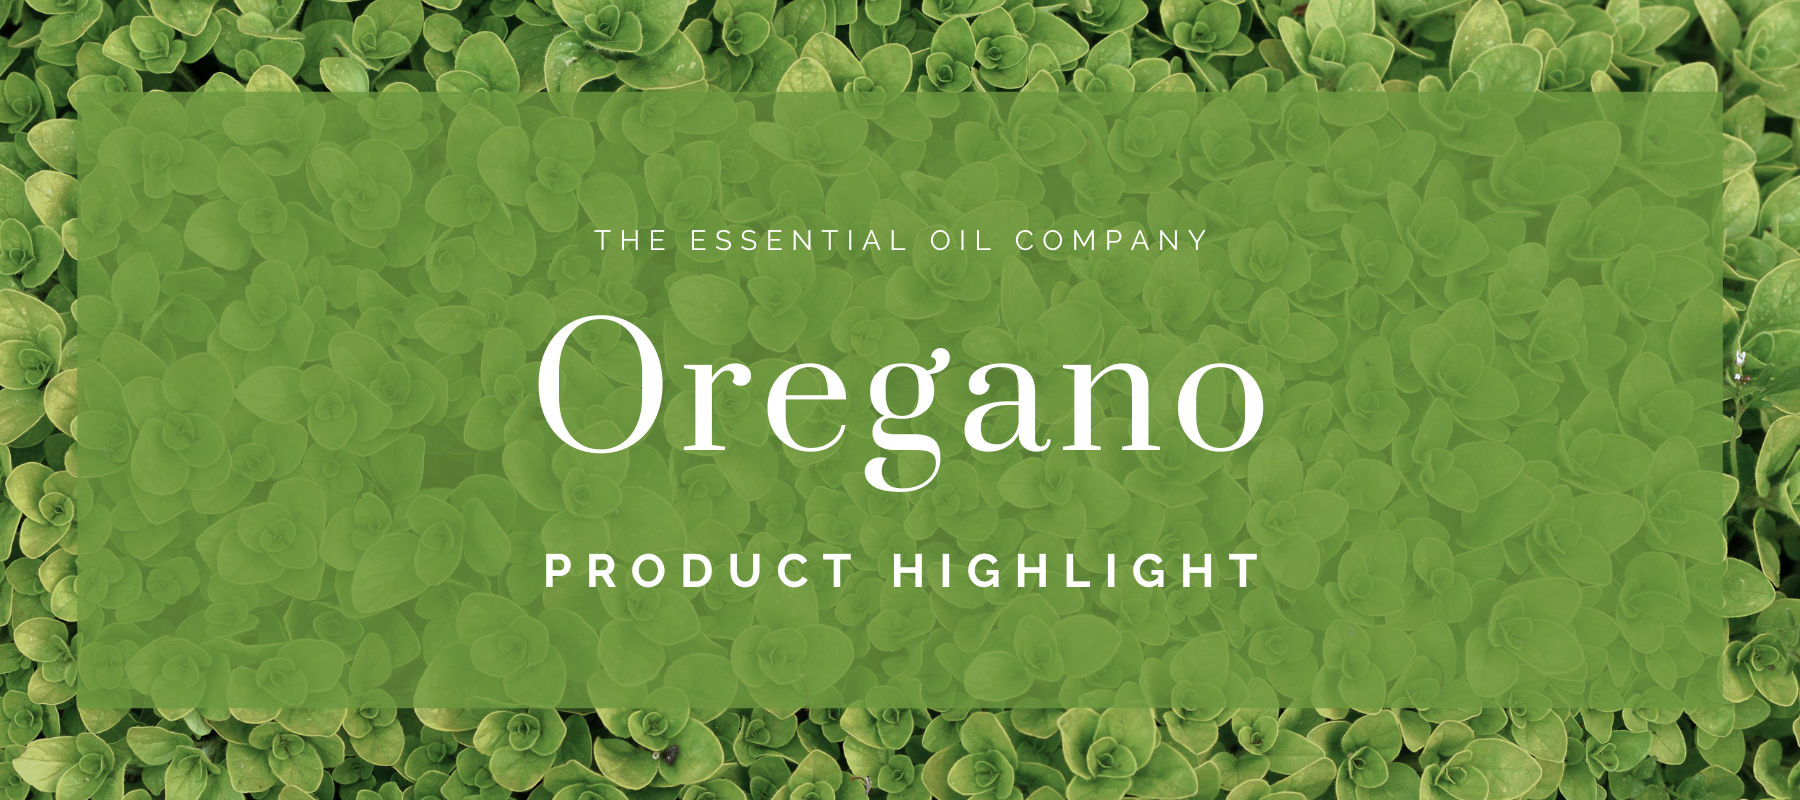 Oregano: Product Highlight